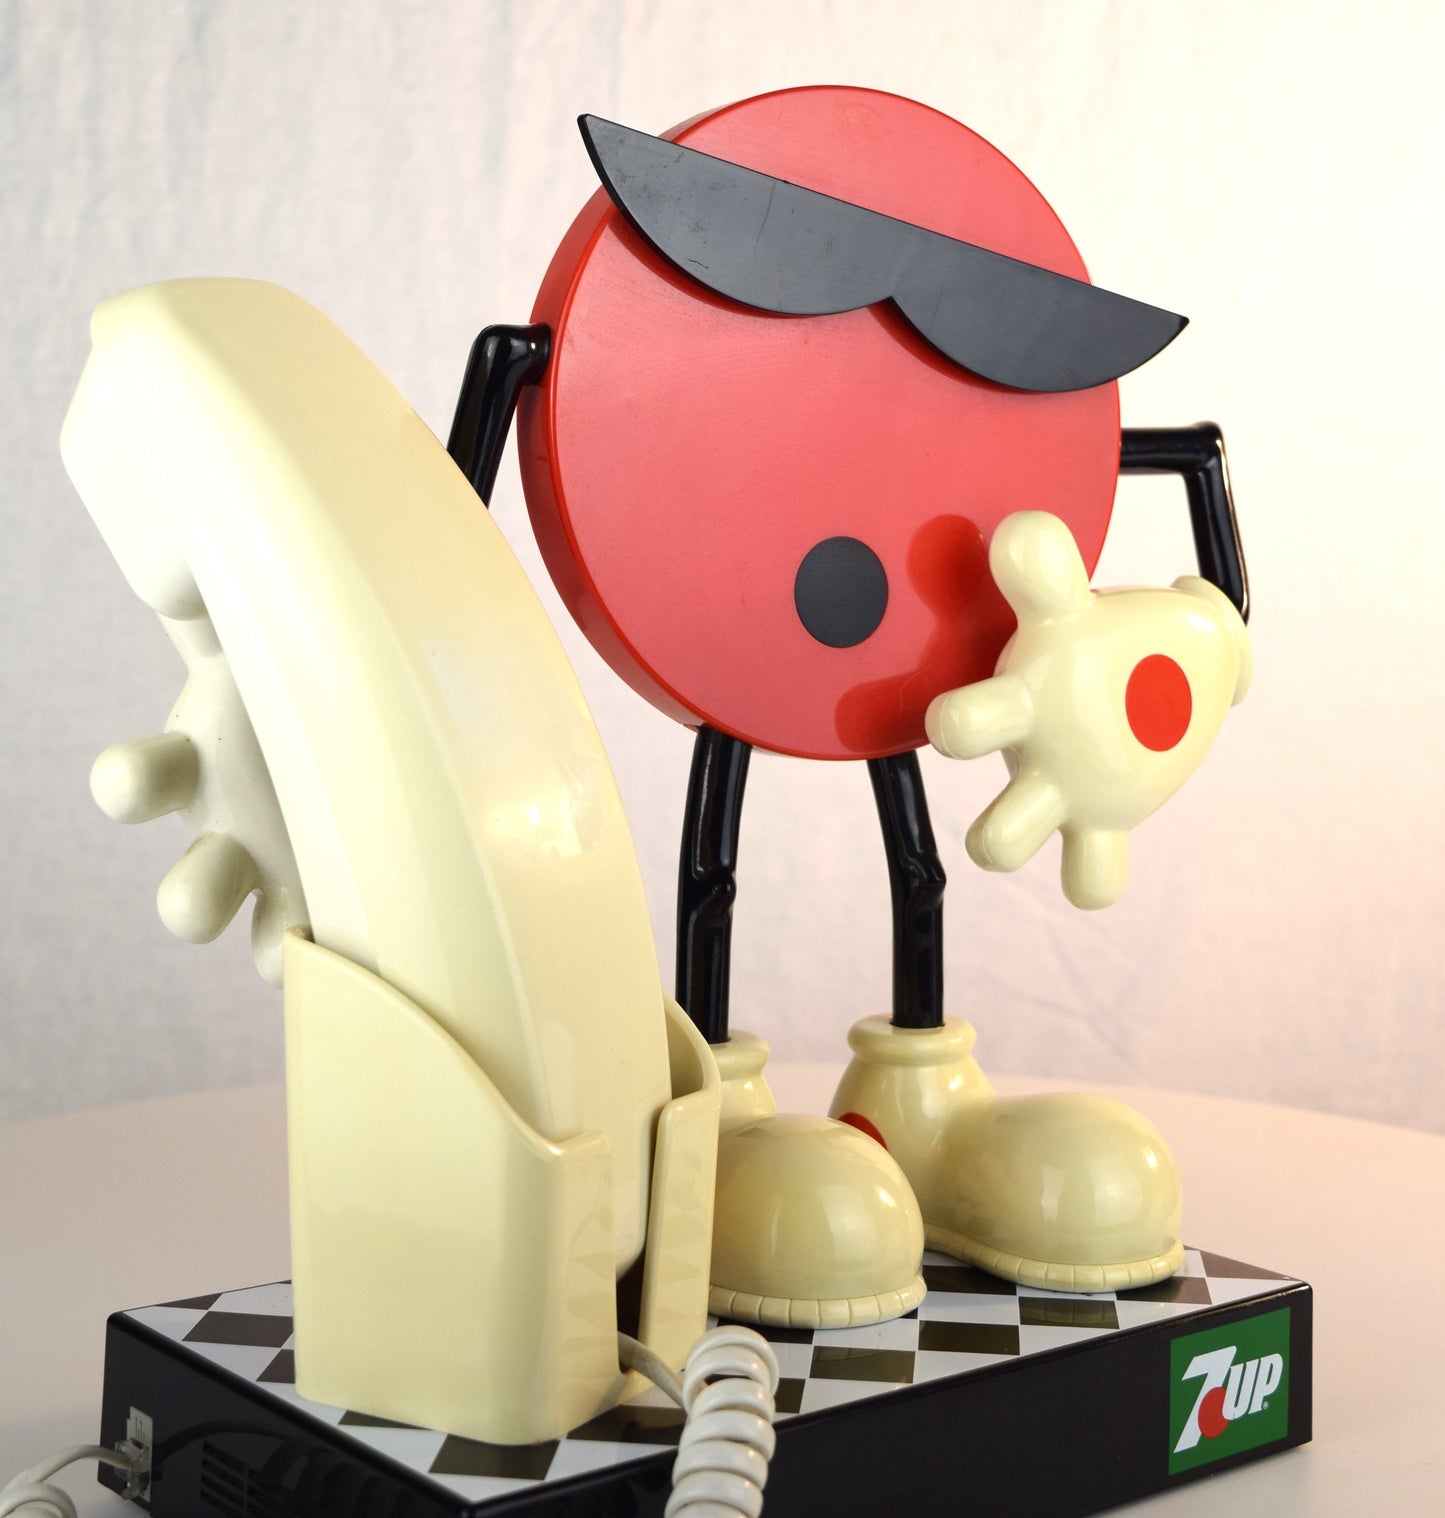 7Up Cool Spot Novelty Telephone